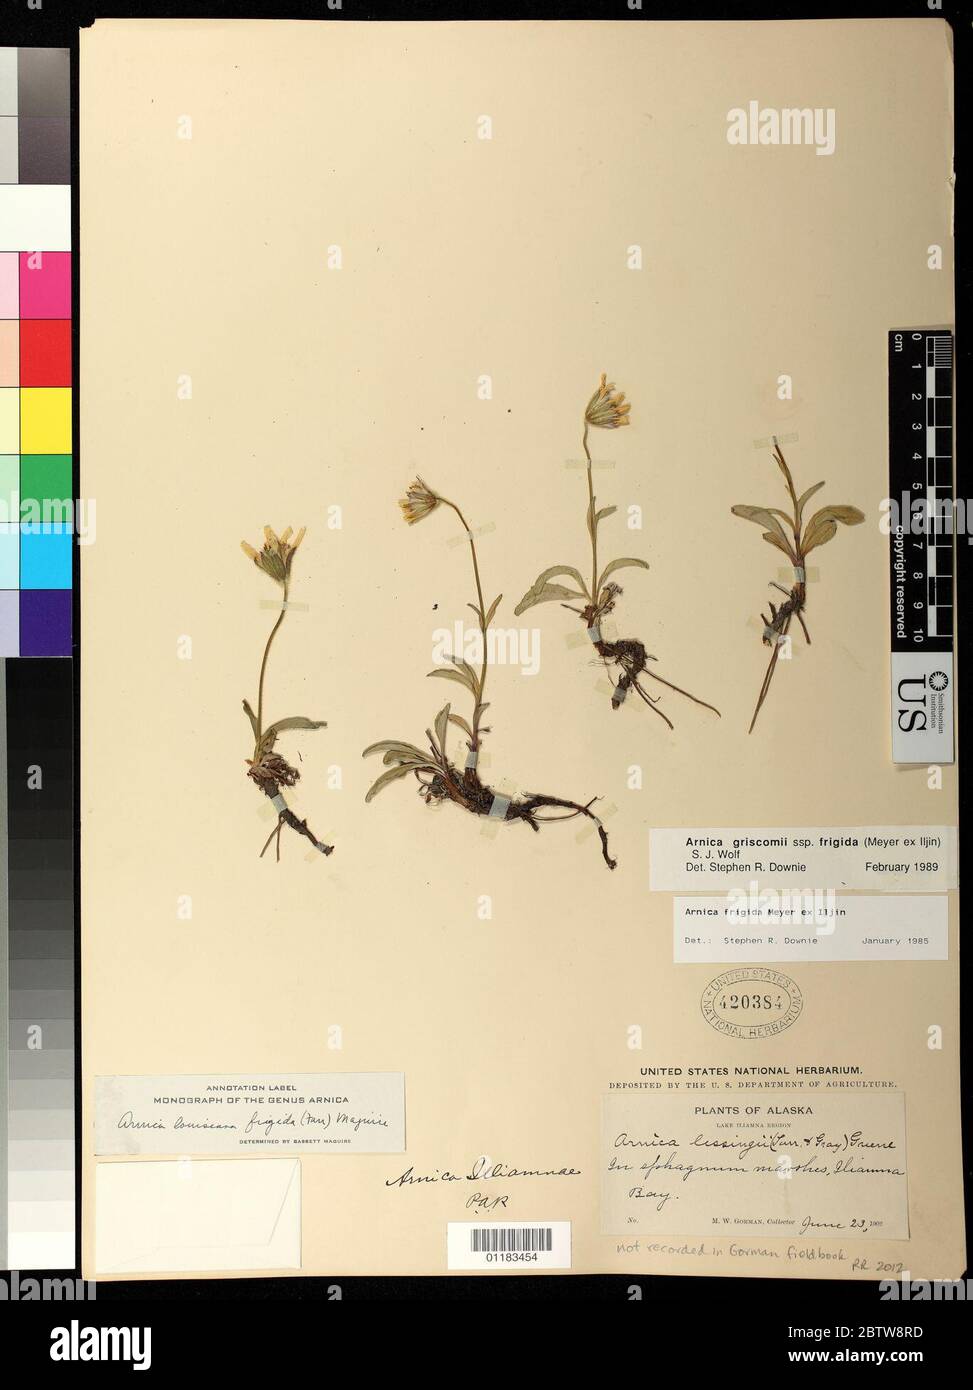 Arnica griscomii subsp frigida CA Mey ex Iljin SJ Wolf. Stock Photo